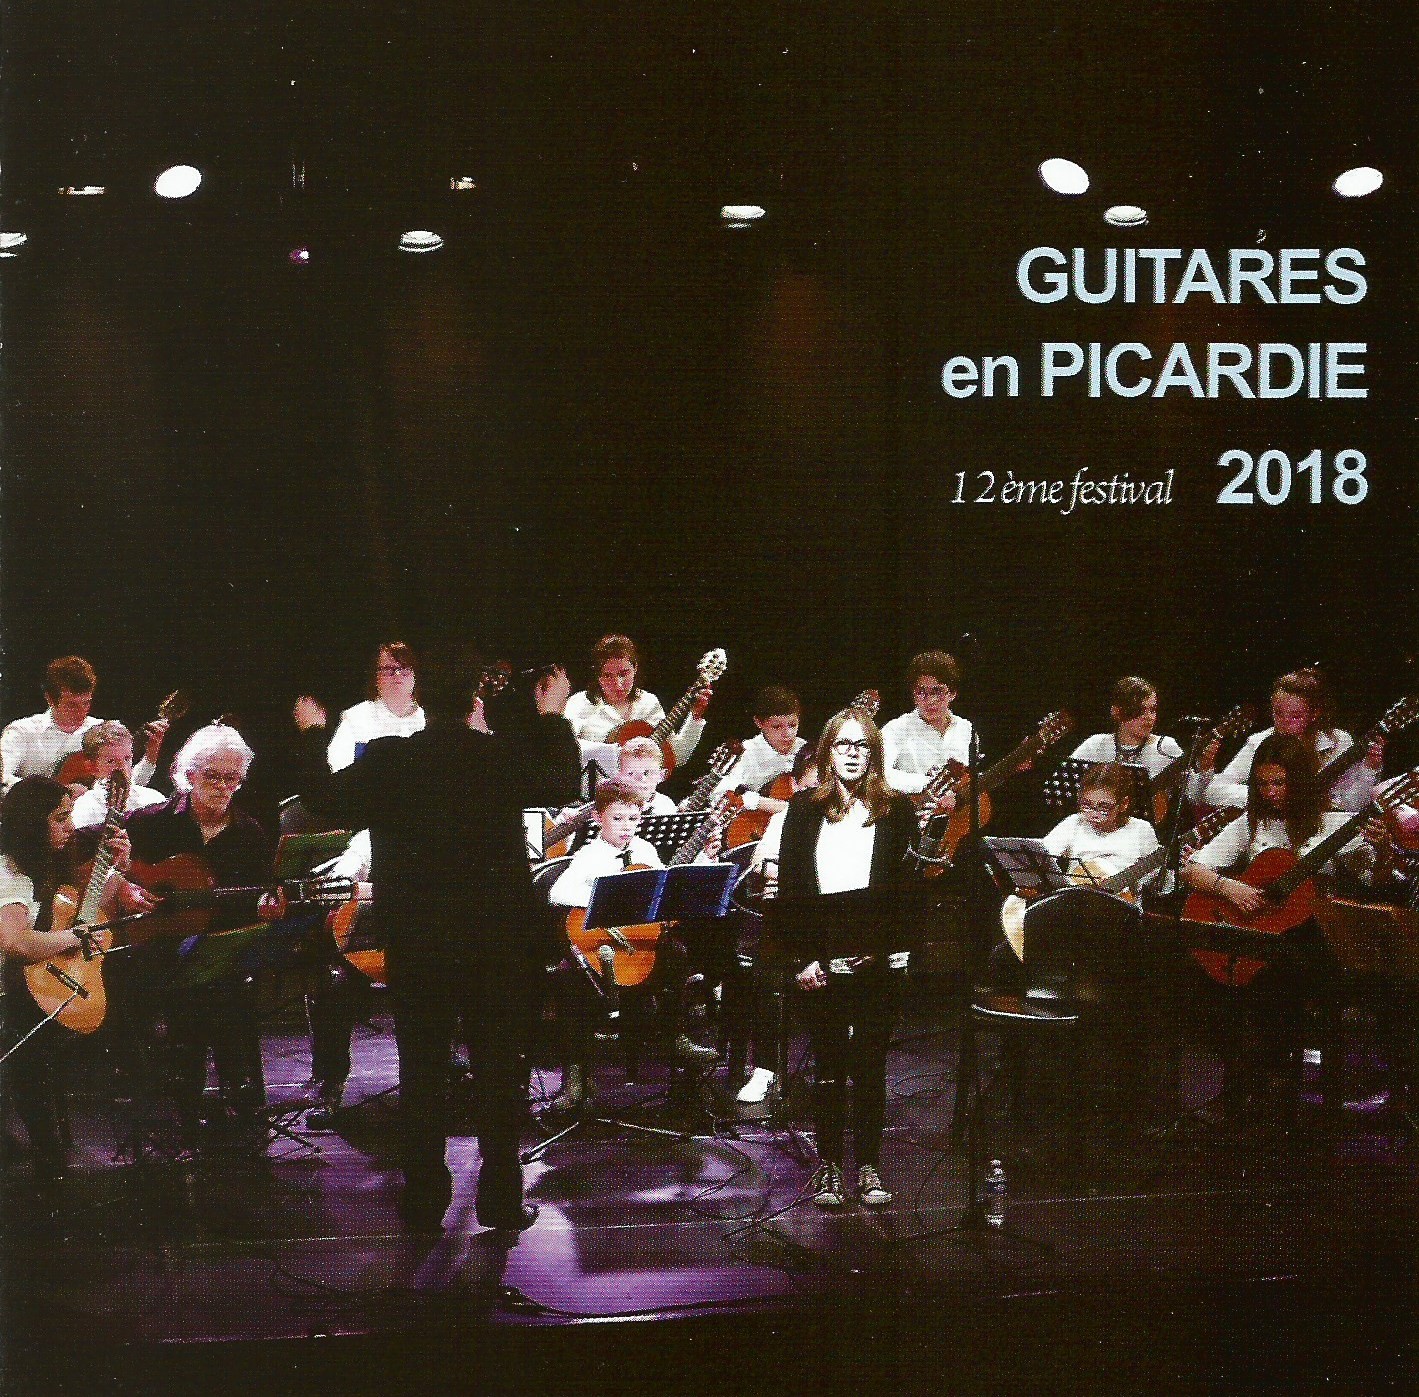 festival "Guitares en Picardie" 2018